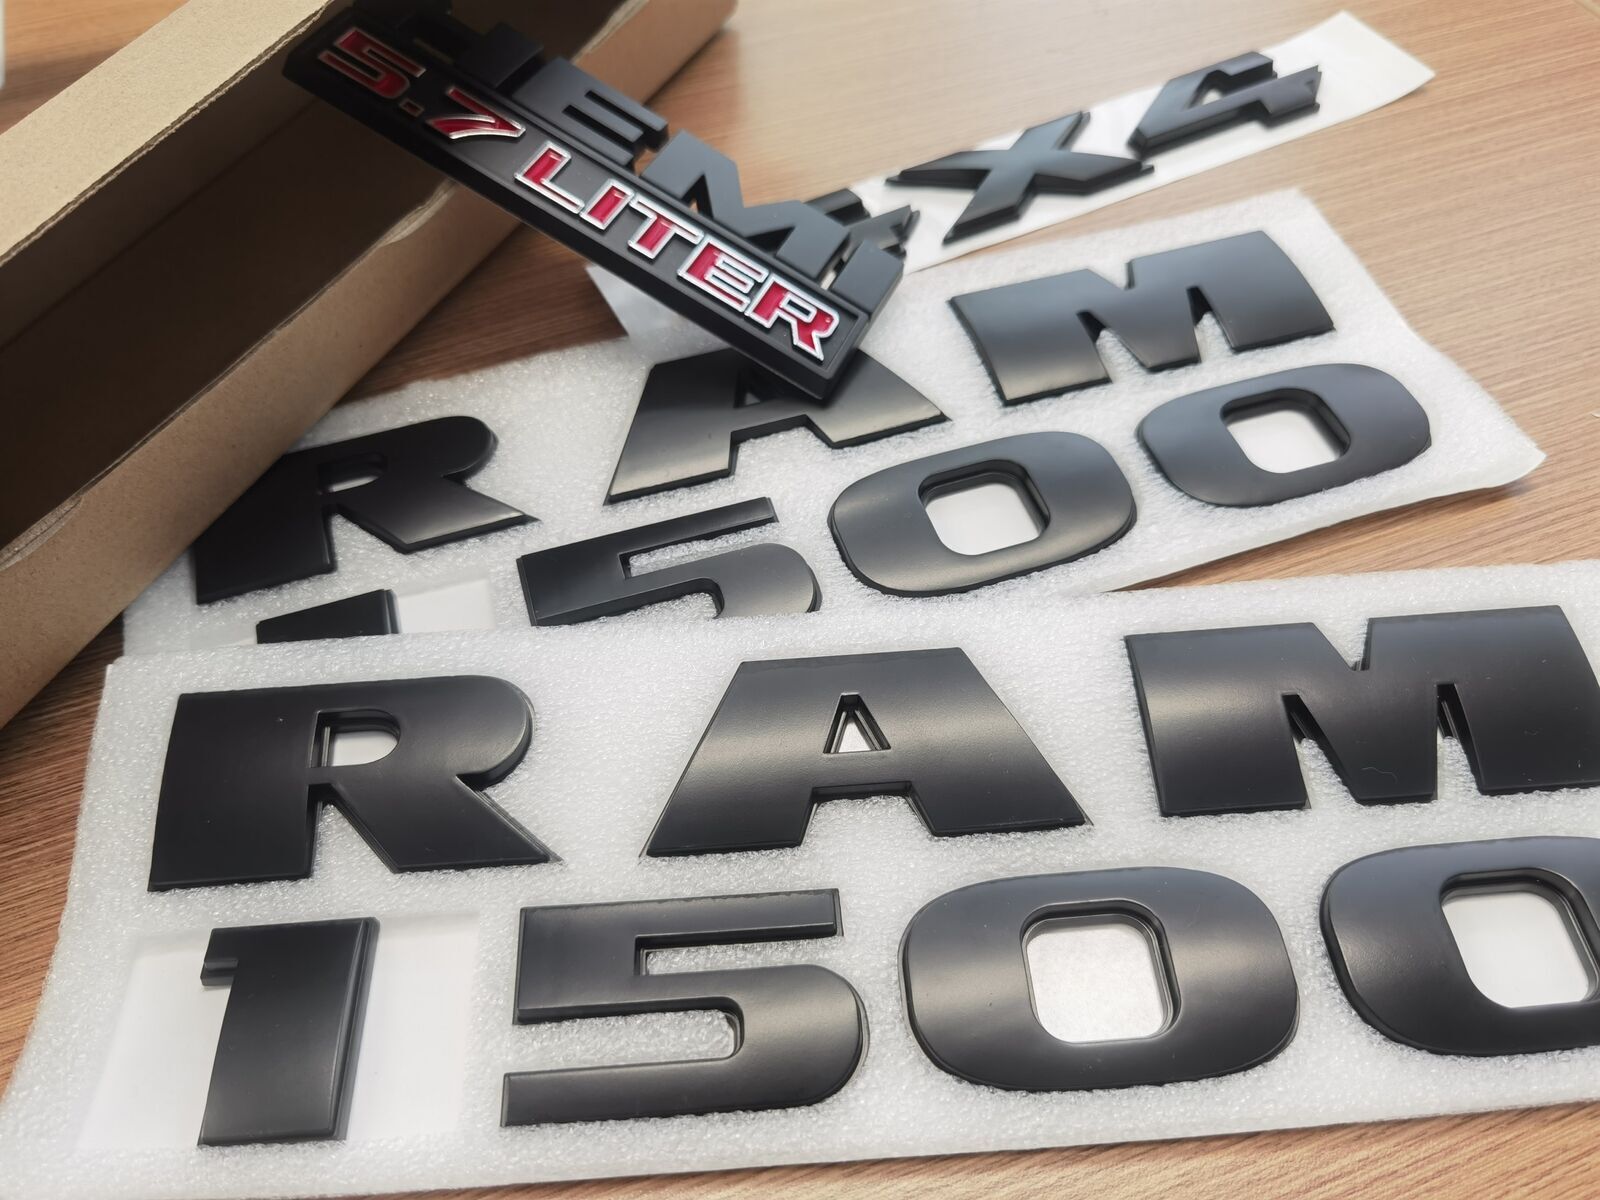 5PCS Set 3D Raised Emblem Letter Badge Fits for RAM 1500 HEMI 5.7LITER 4x4 Model